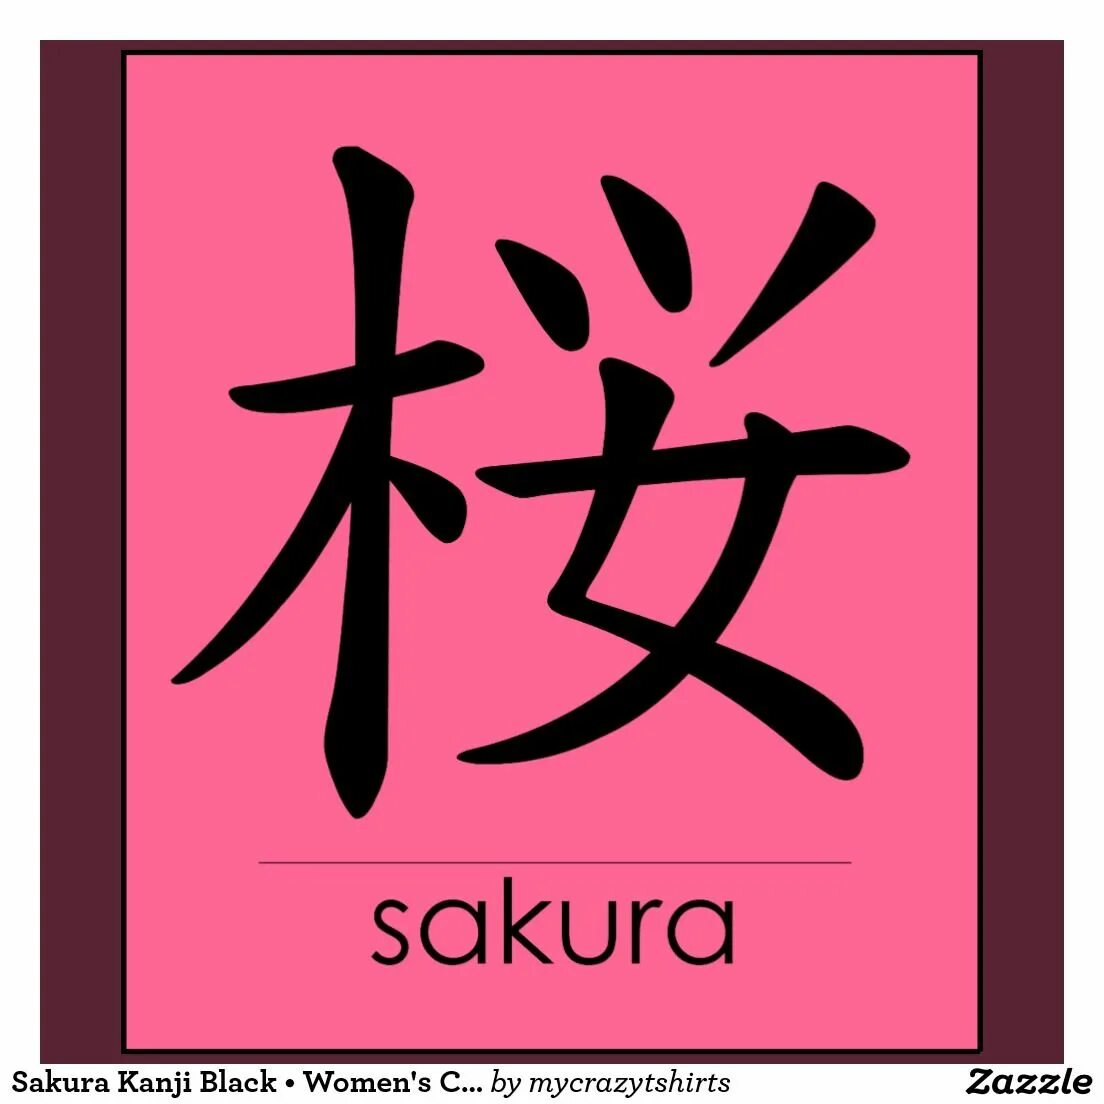 Иероглиф Сакура. Японские символы. Японские иероглифы. Китайские символы Сакура.